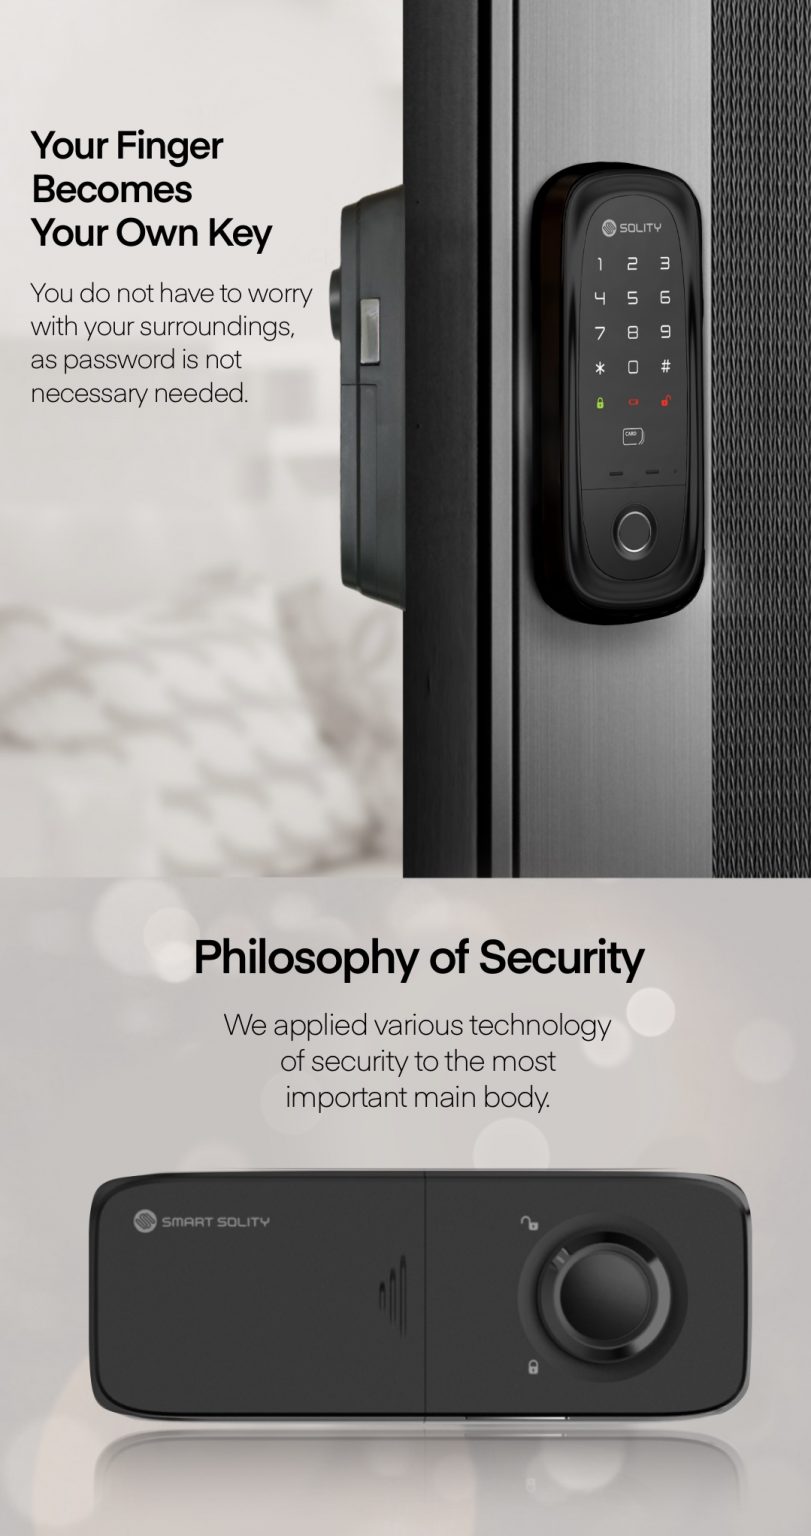 Fingerprint identification is more secure than using pin code. Solity GA-65B Rim Digital Door Lock has both fingerprint, pin code as well as card access.